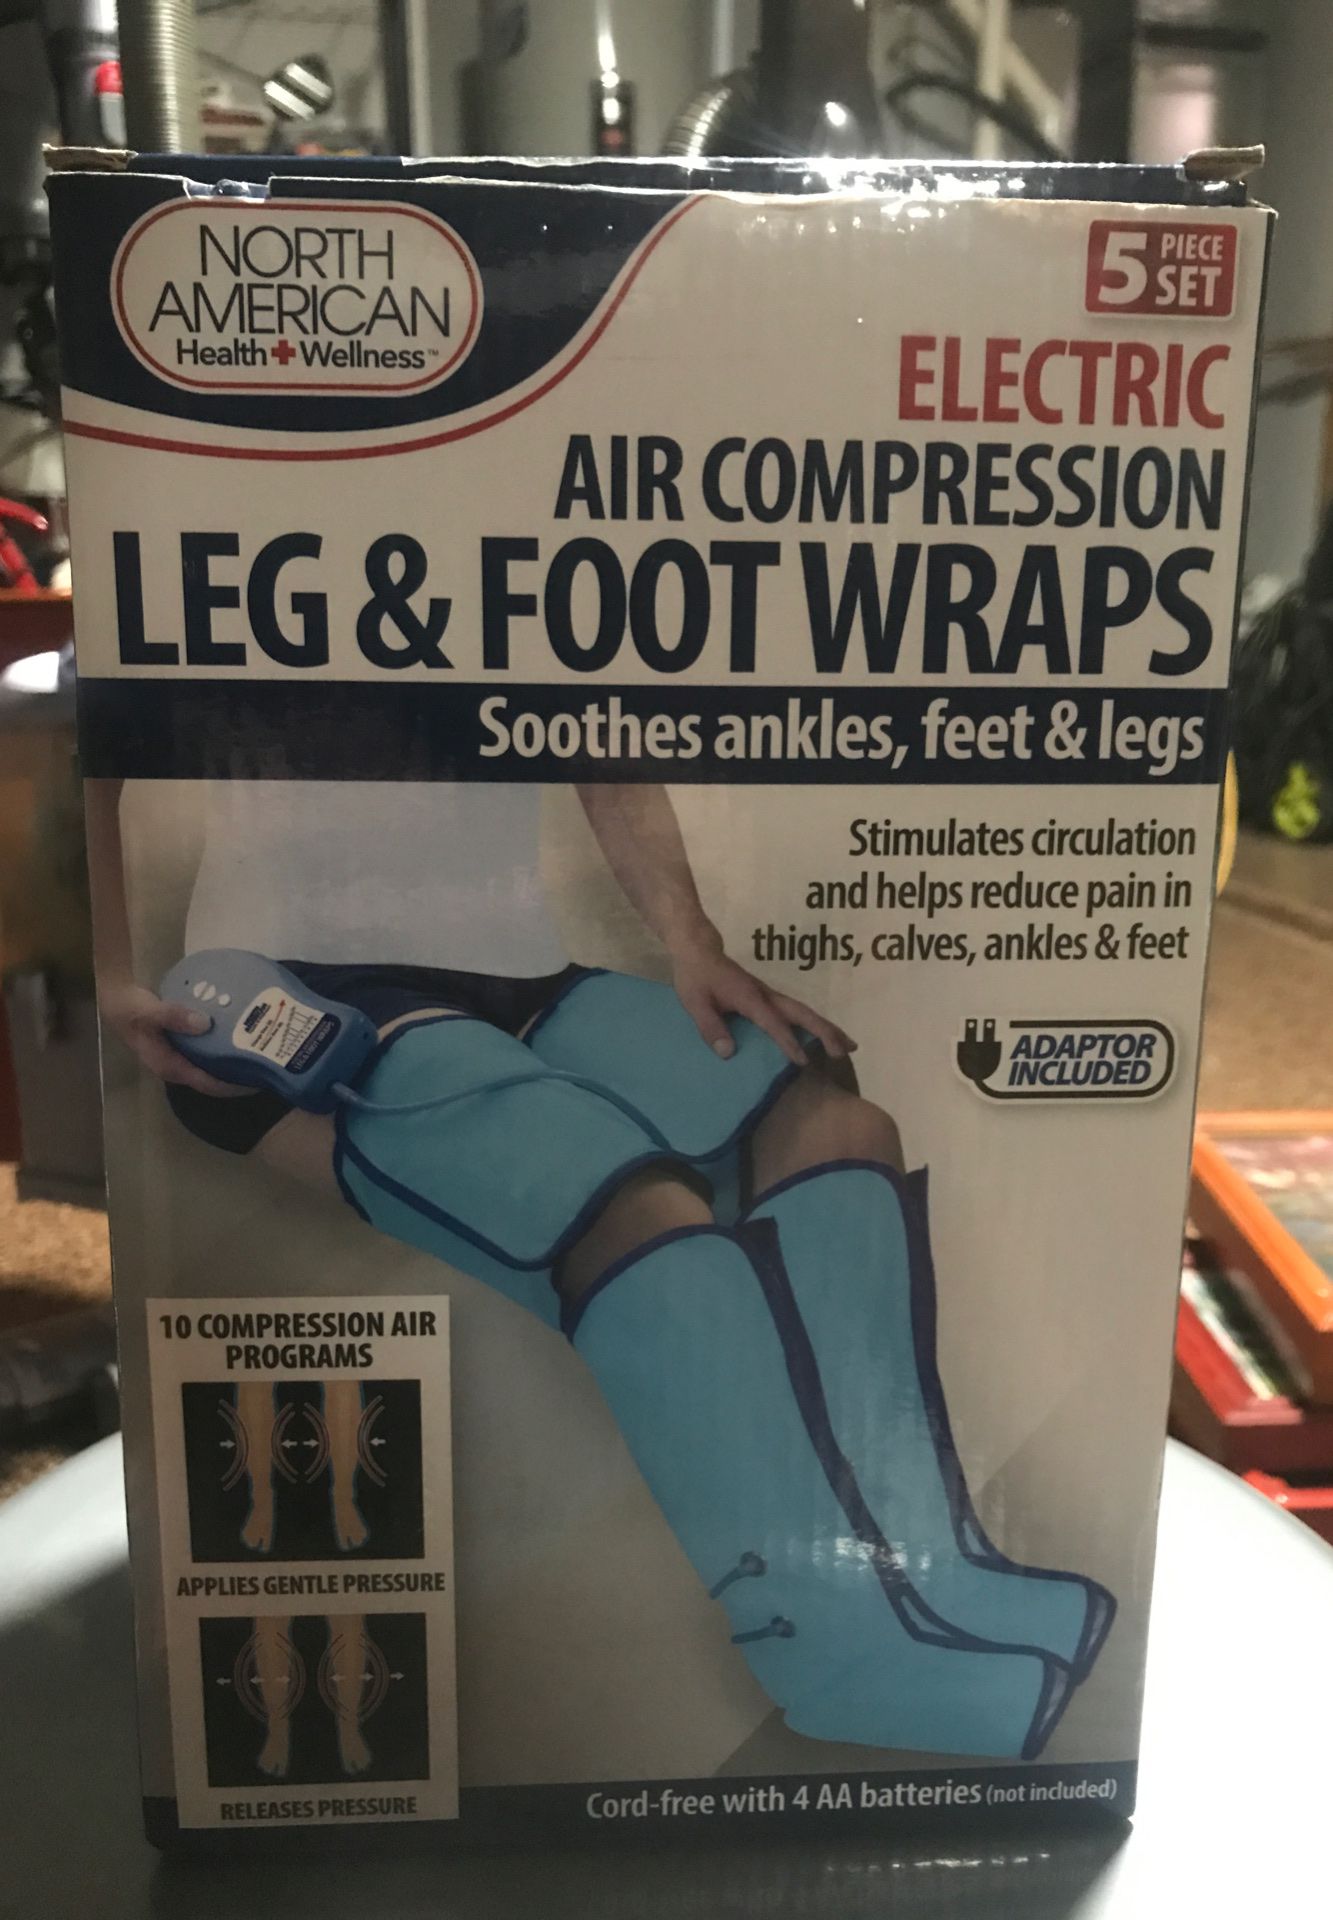 Electric air compression leg & foot wraps.